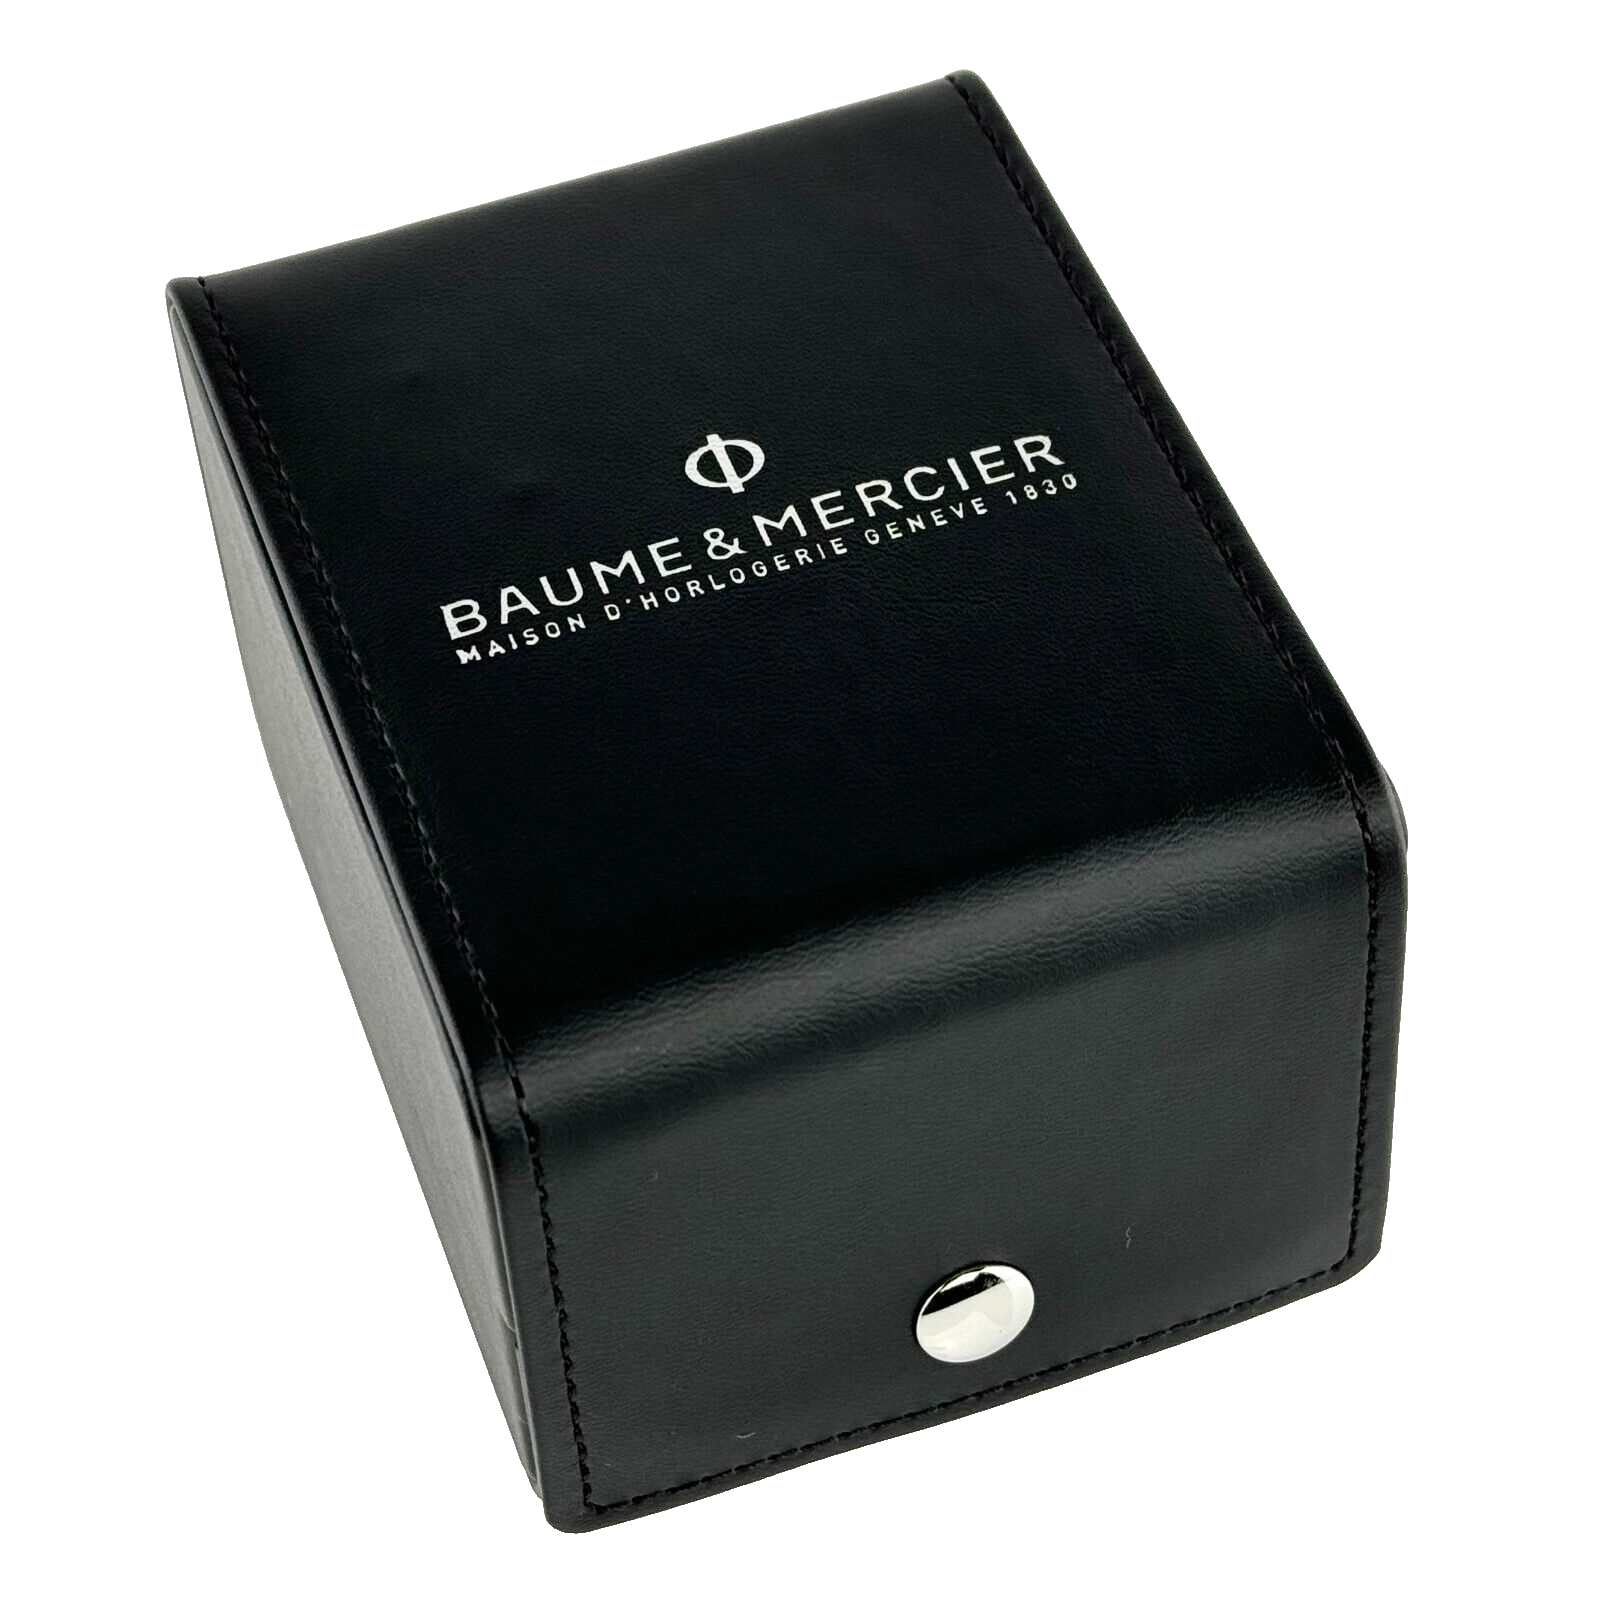 Baume & Mercier Travel Case Pouch Etui Reisebox Reiseetui Uhrenetui Schwarz black Leder Leather Watch case